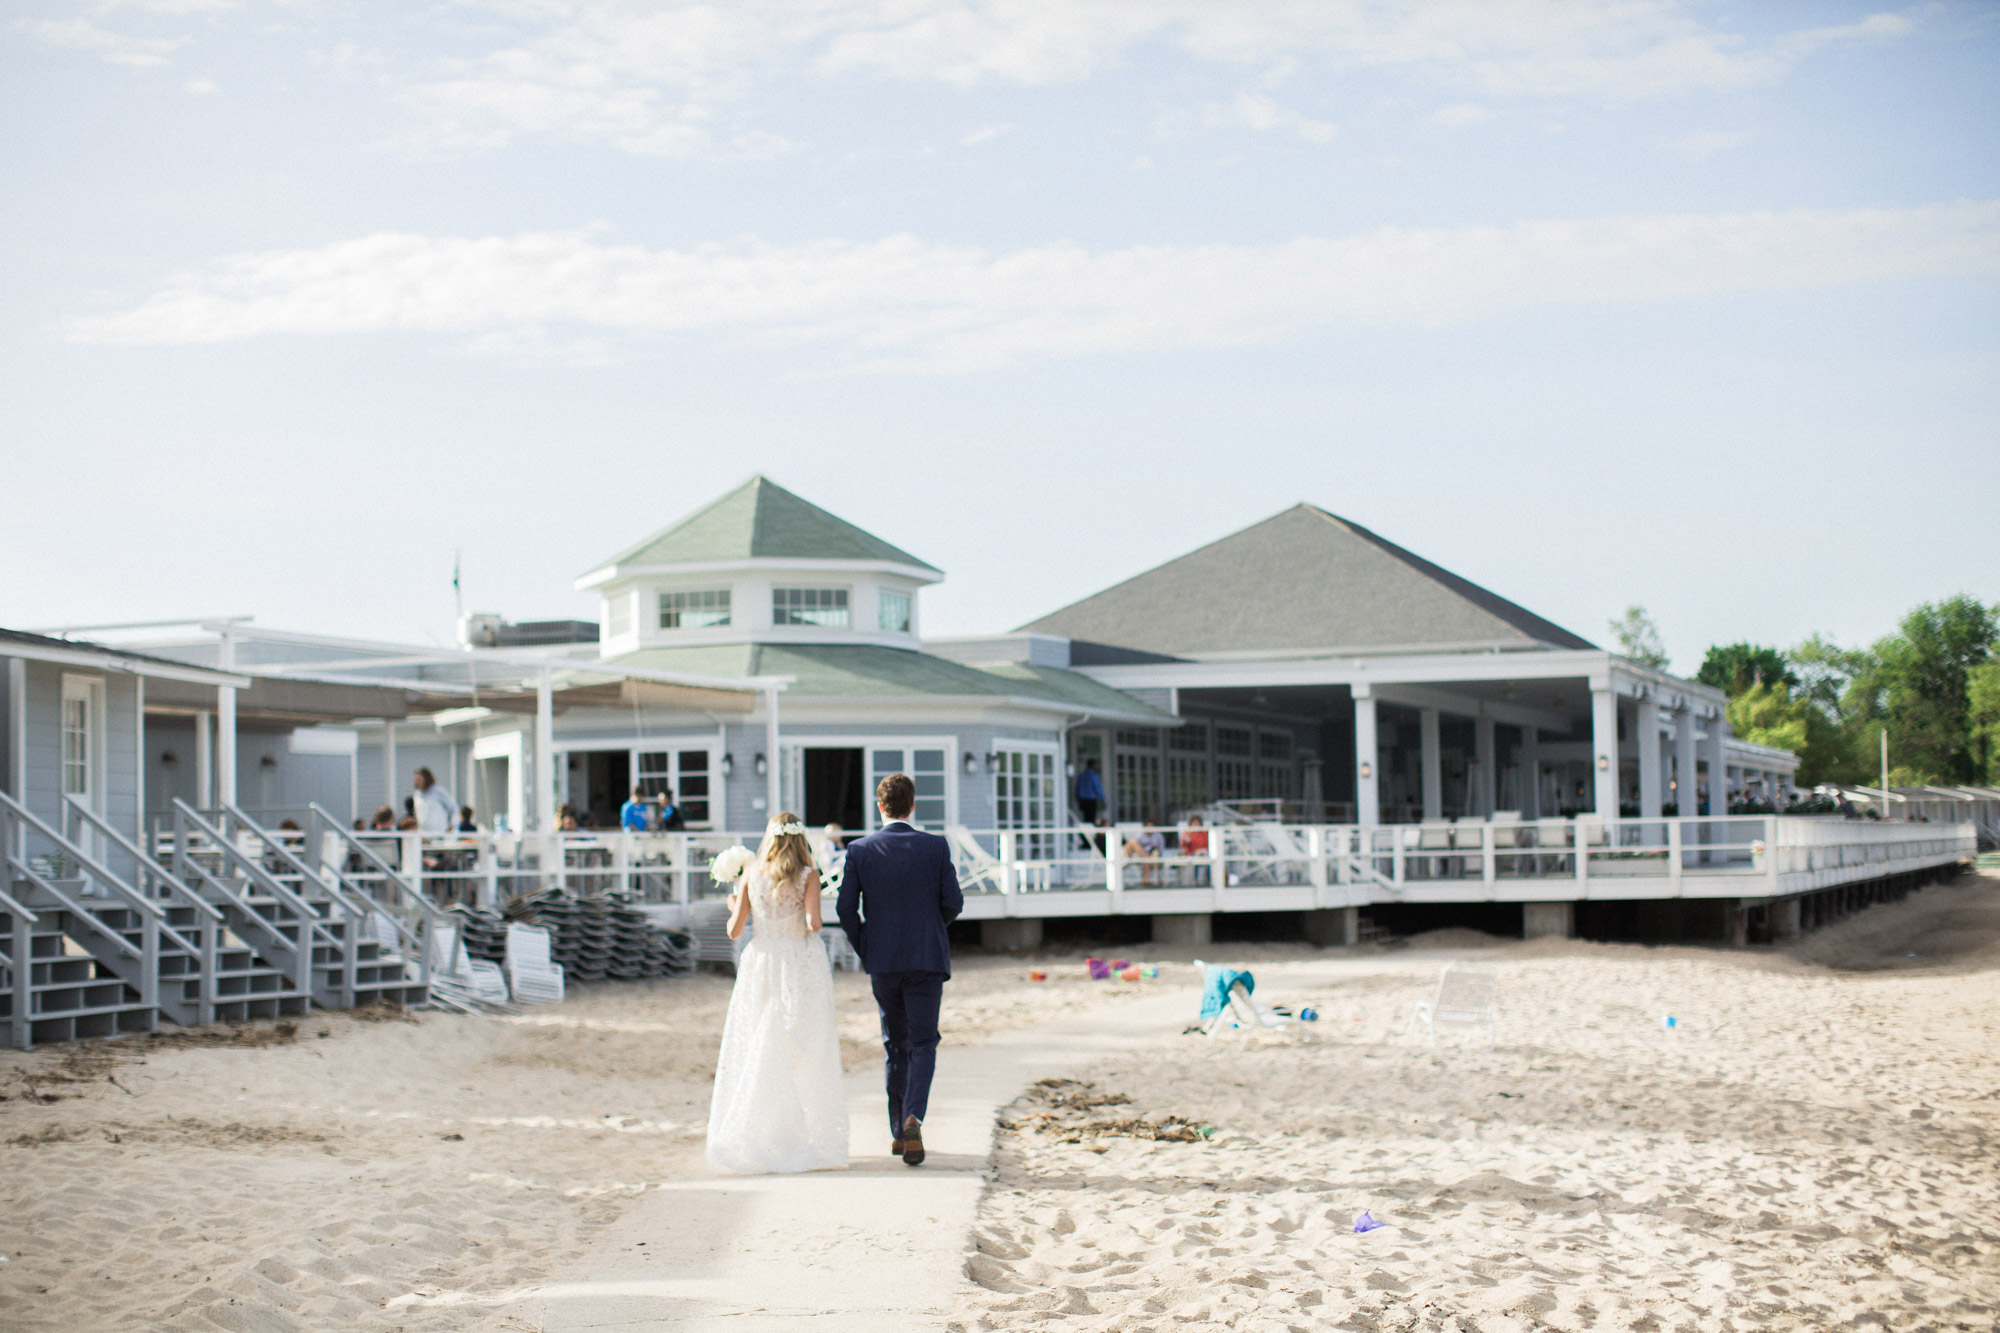 Beach club wedding at Shenorock Shore Club in Rye, New York. Photos by Kelly Kollar Photography.